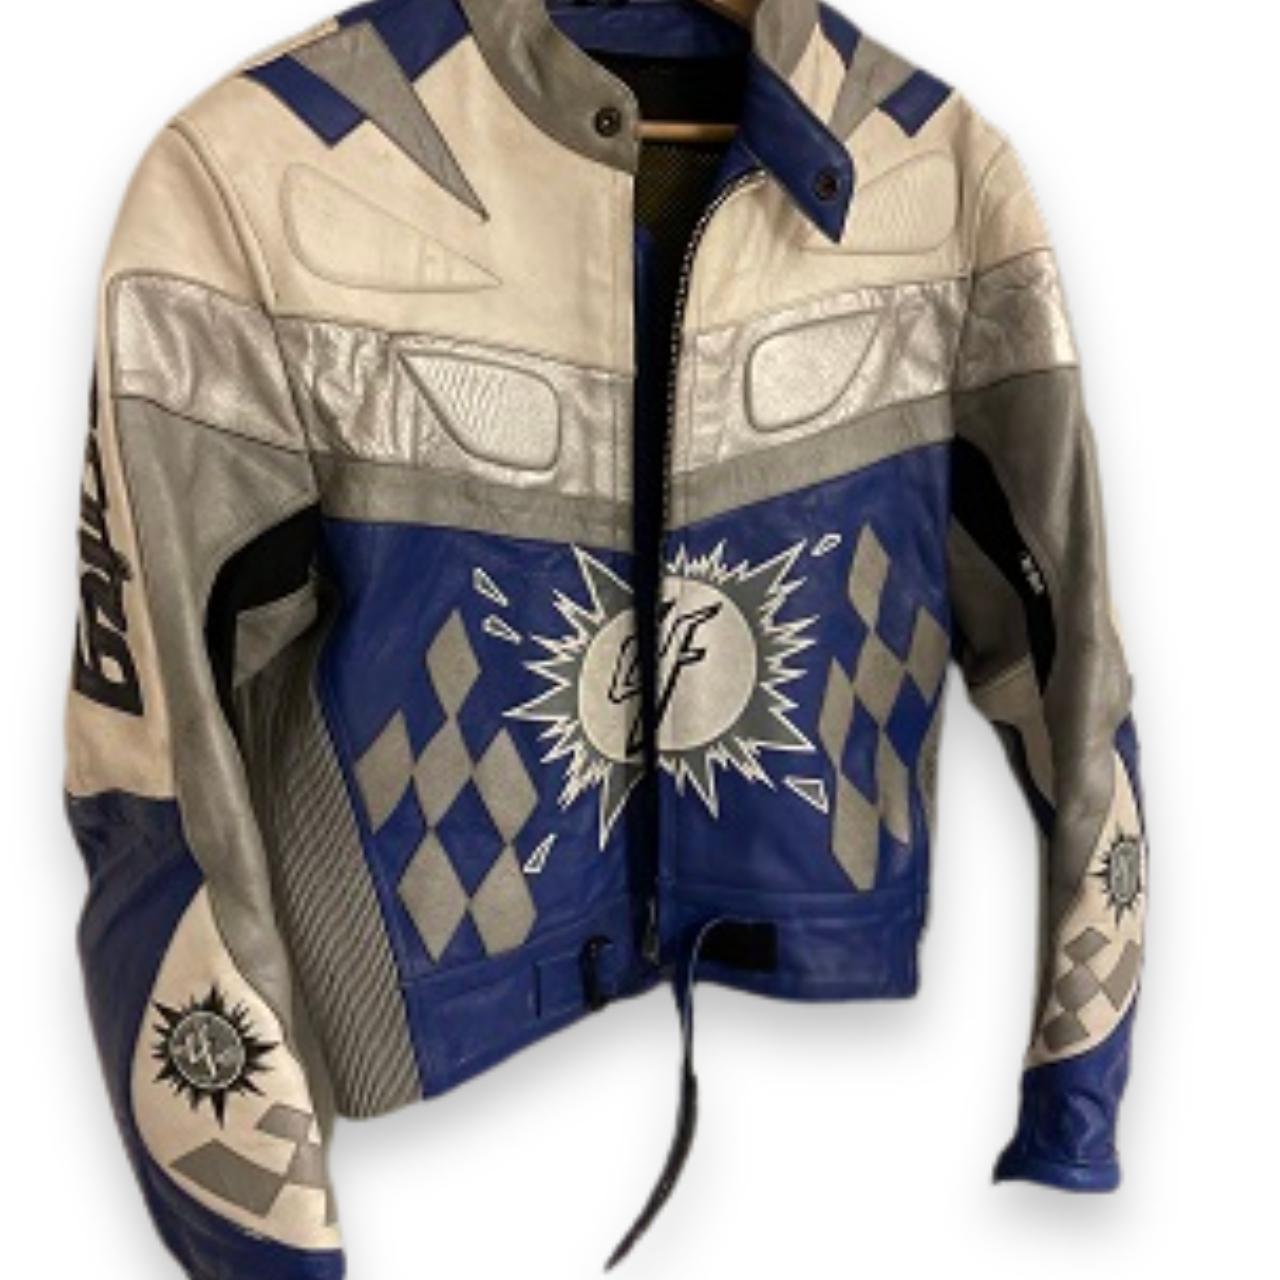 Vintage multi-color Luca Ferreira Motorcycle leather jacket